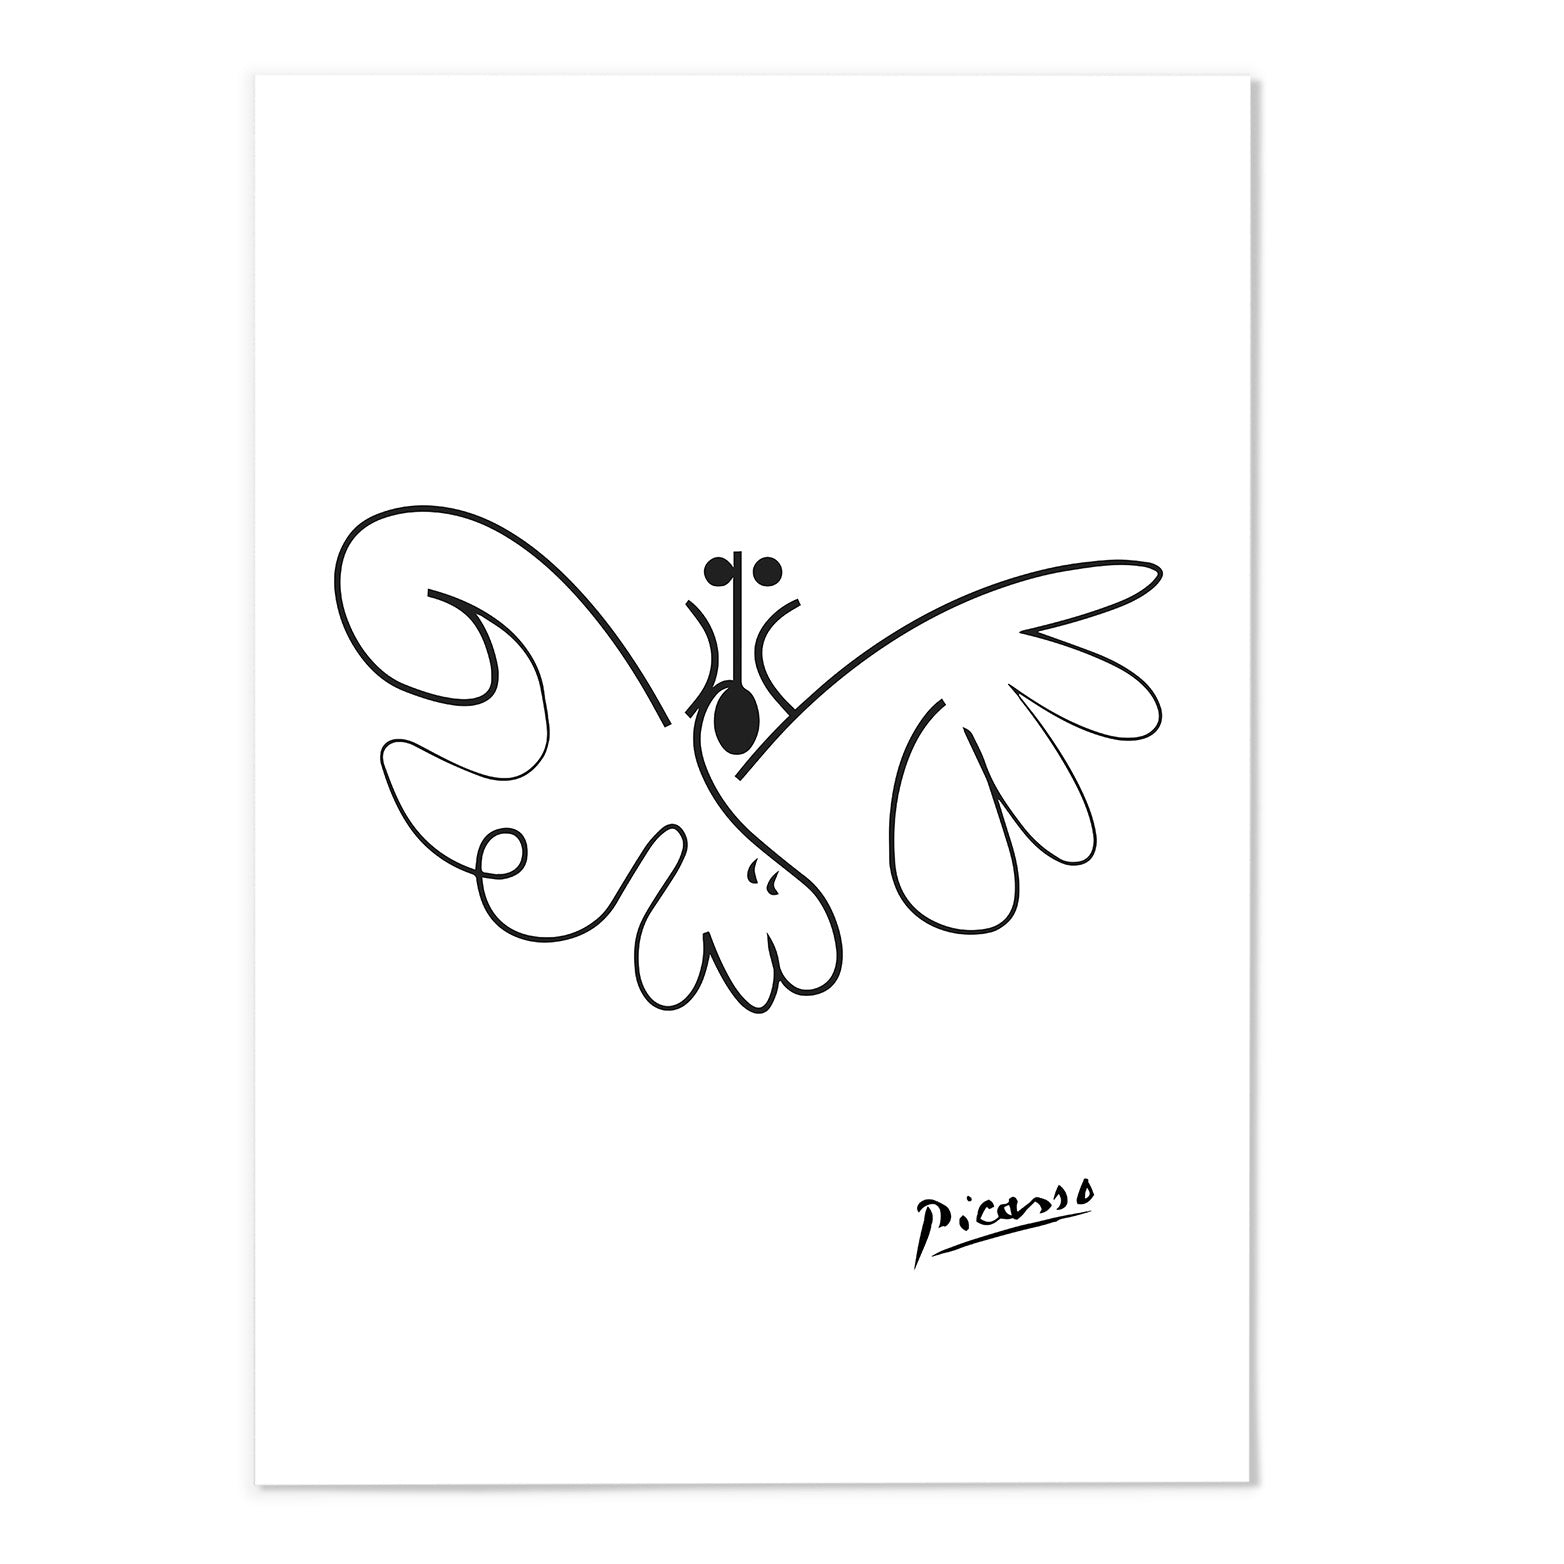 Picasso Butterfly Line Sketch Art Print - MJ Design Studio